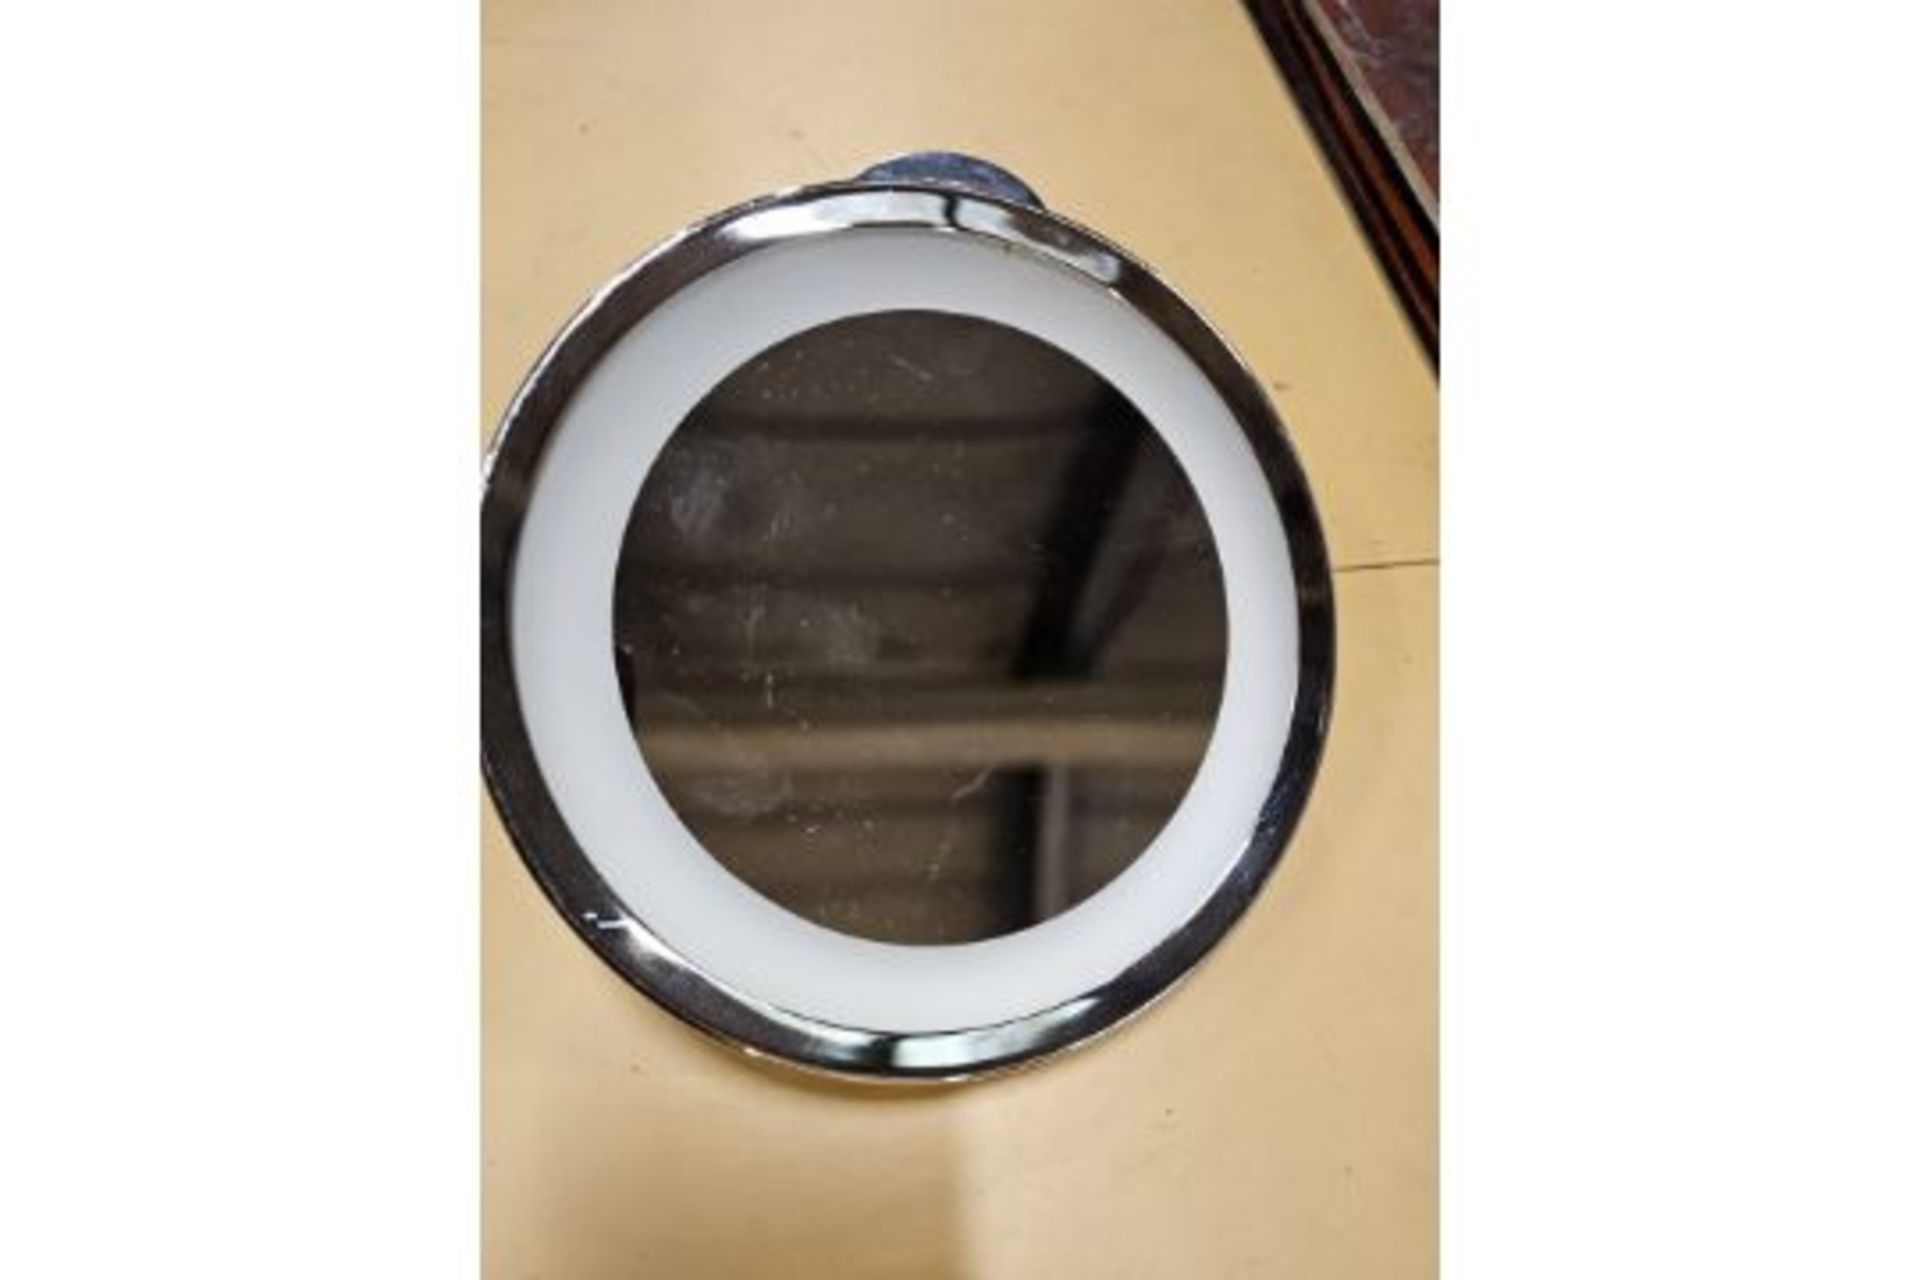 Led Illuminated Magnifying Vanity Mirror For Bathroom Round Ingress Protection Rating Ip44 - Bild 3 aus 3